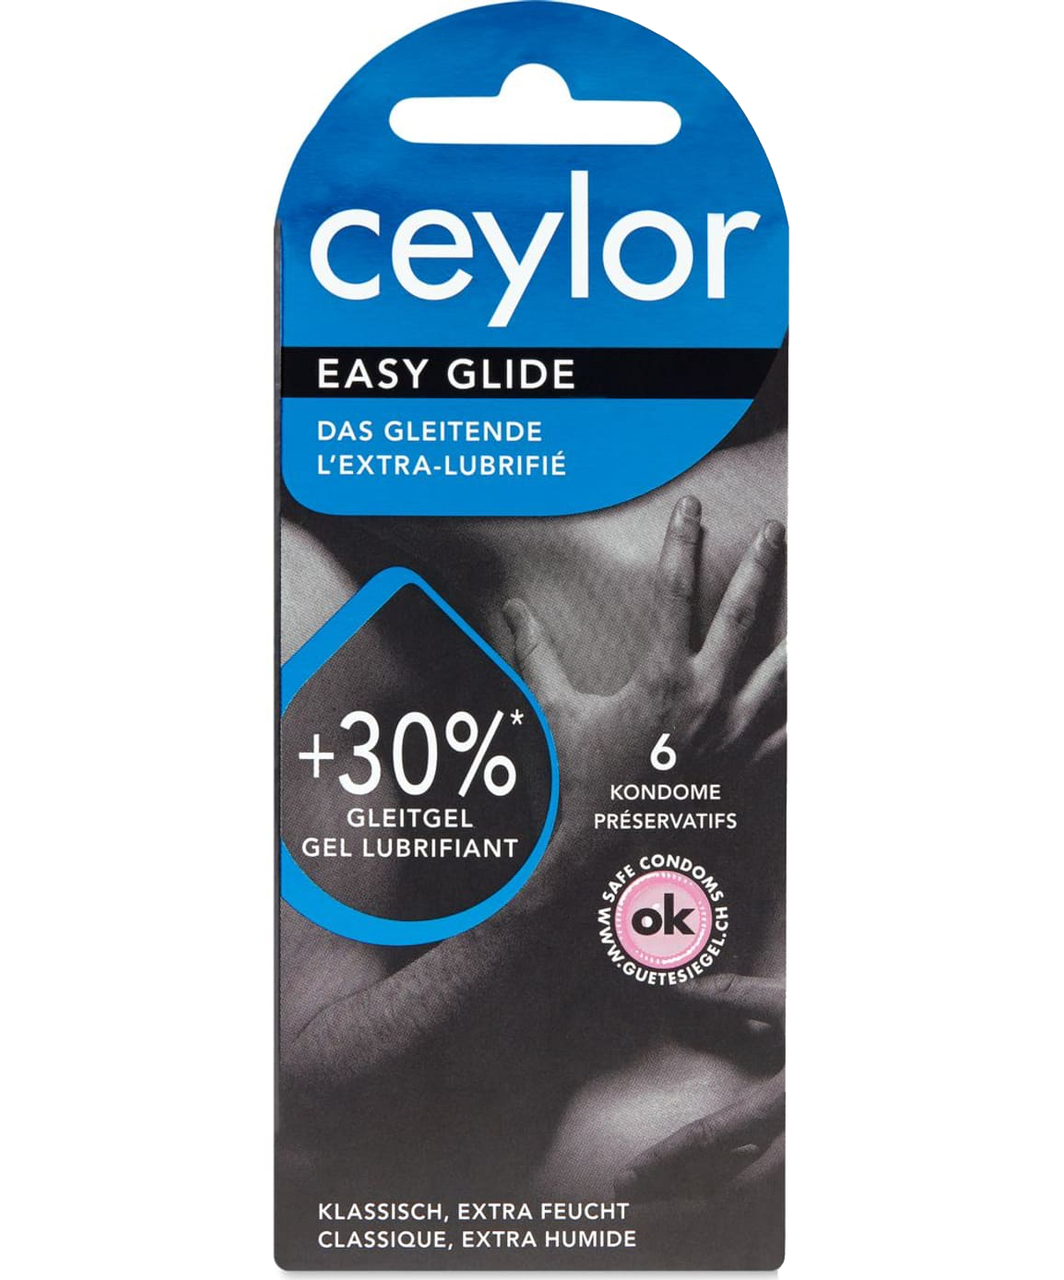 Ceylor Easy Glide condoms (6 pcs)